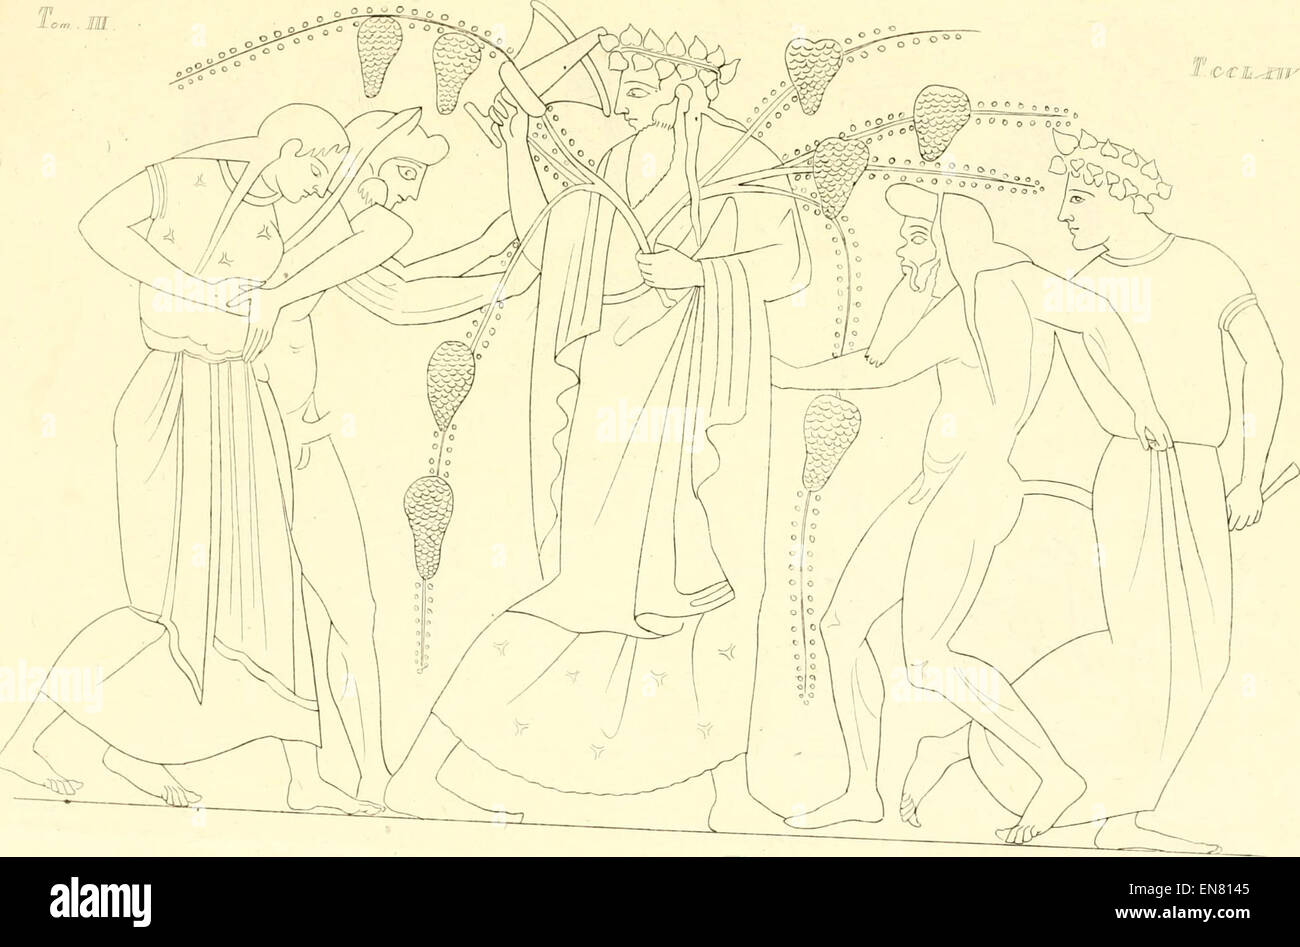 INGHIRAMI(1835) Pitture di vasi fittili Vol3 T264 (14598289928) Stock Photo